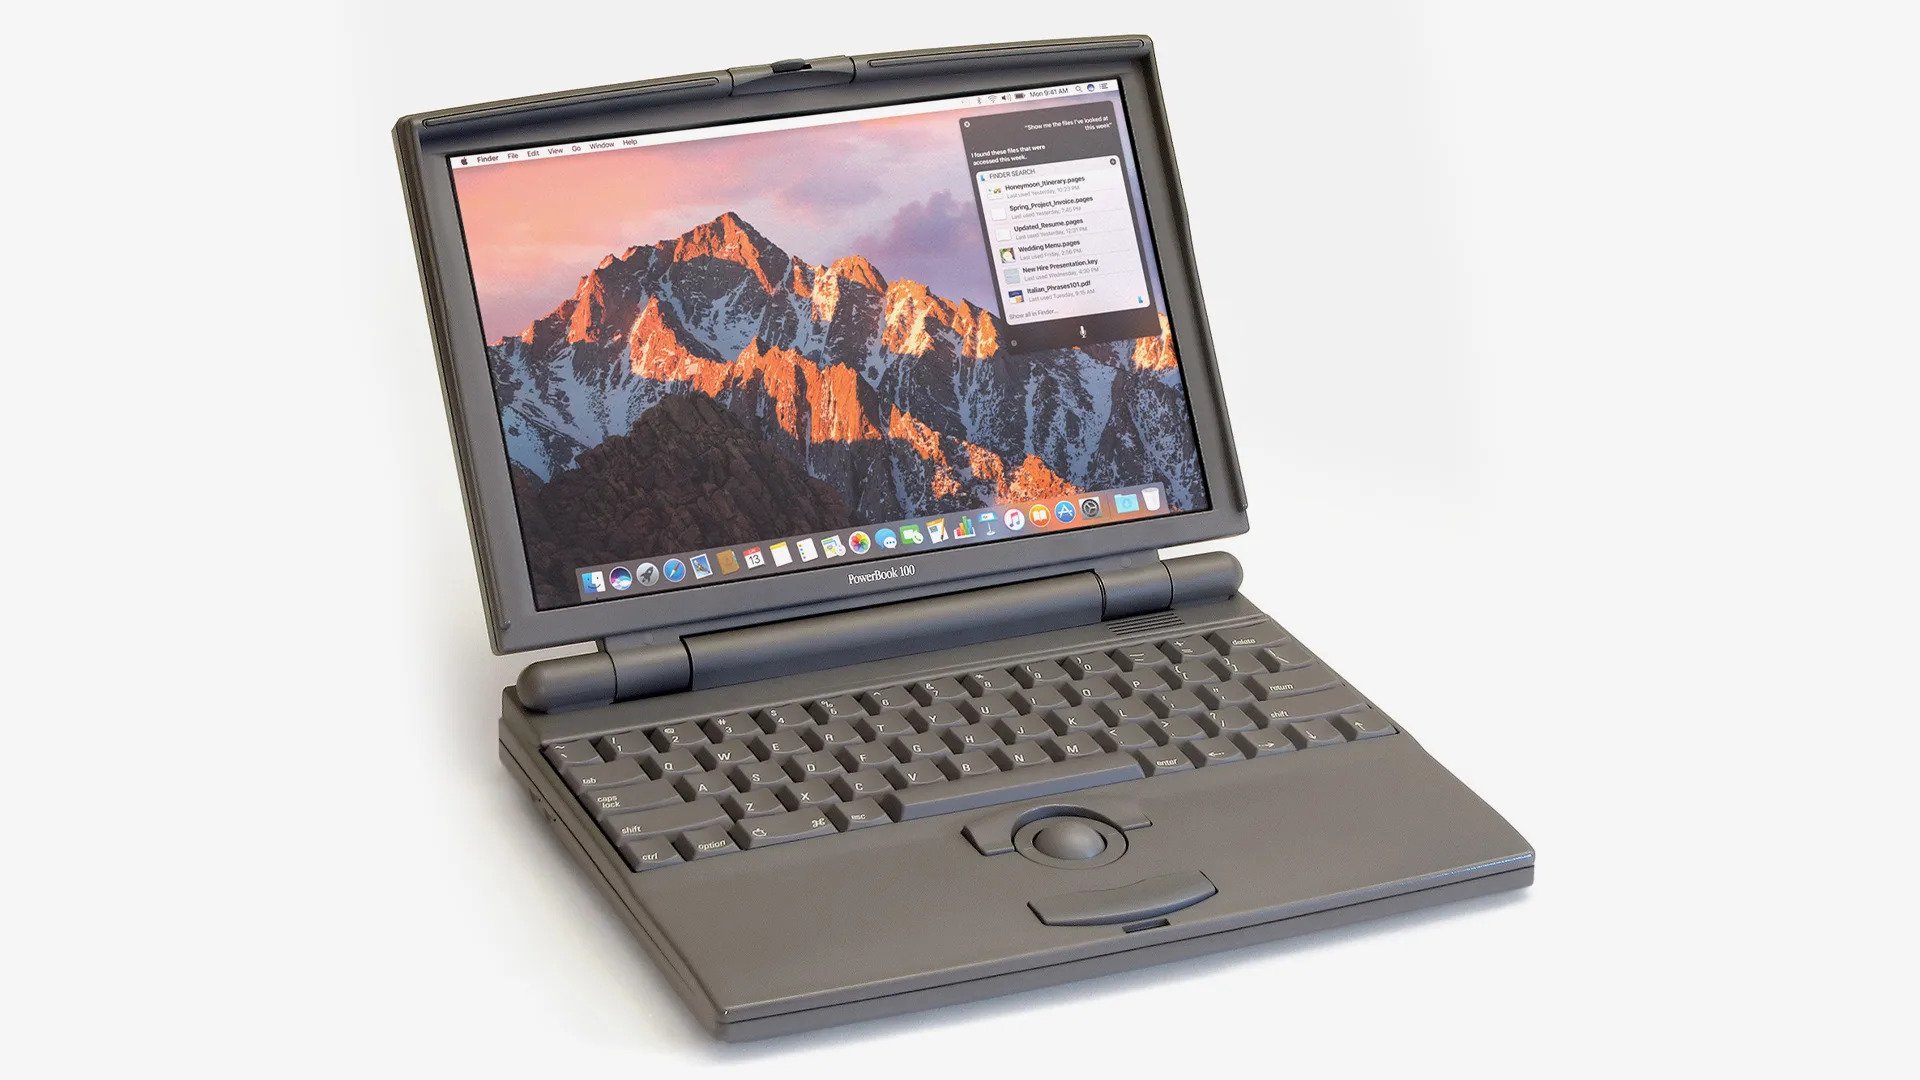 every macbook ever - the powerbook 300